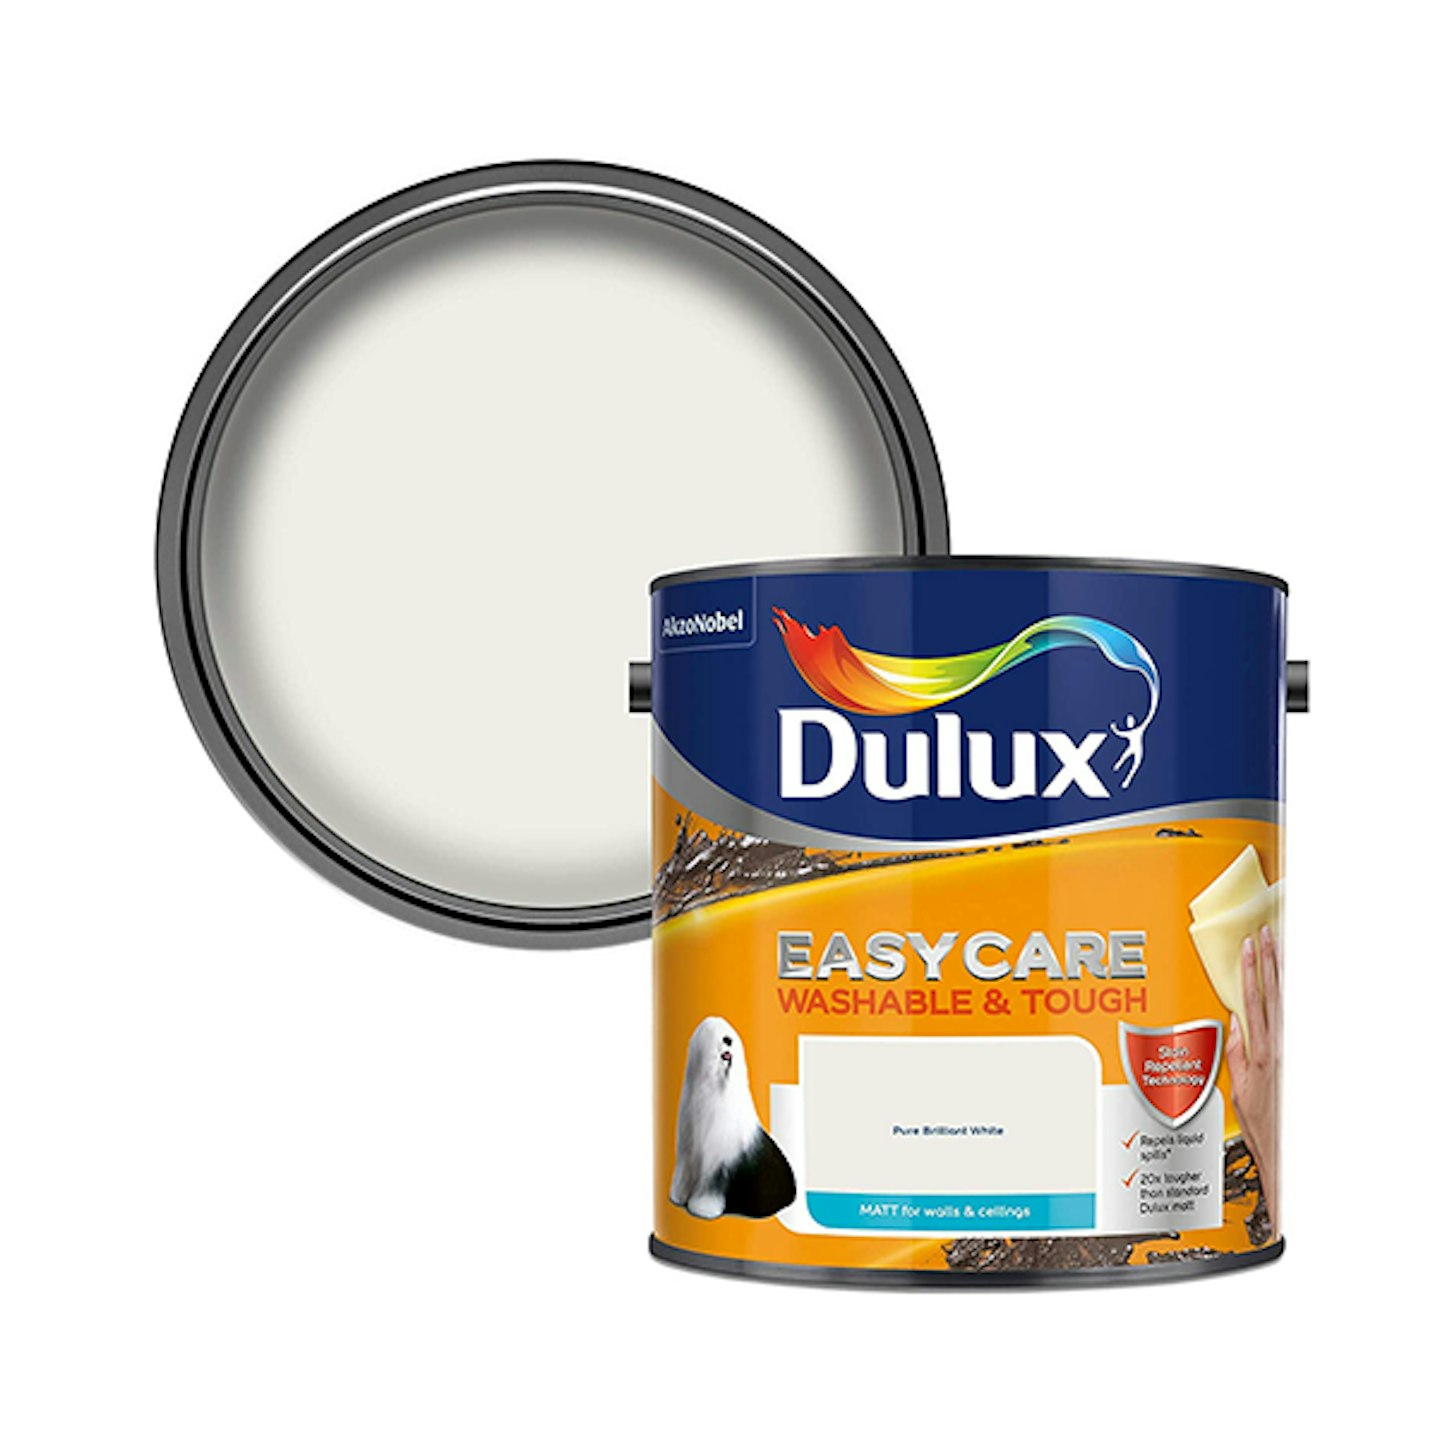 Dulux Easycare Washable & Tough Matt Emulsion Paint For Walls And Ceilings - Pure Brilliant White 2. 5 Litres